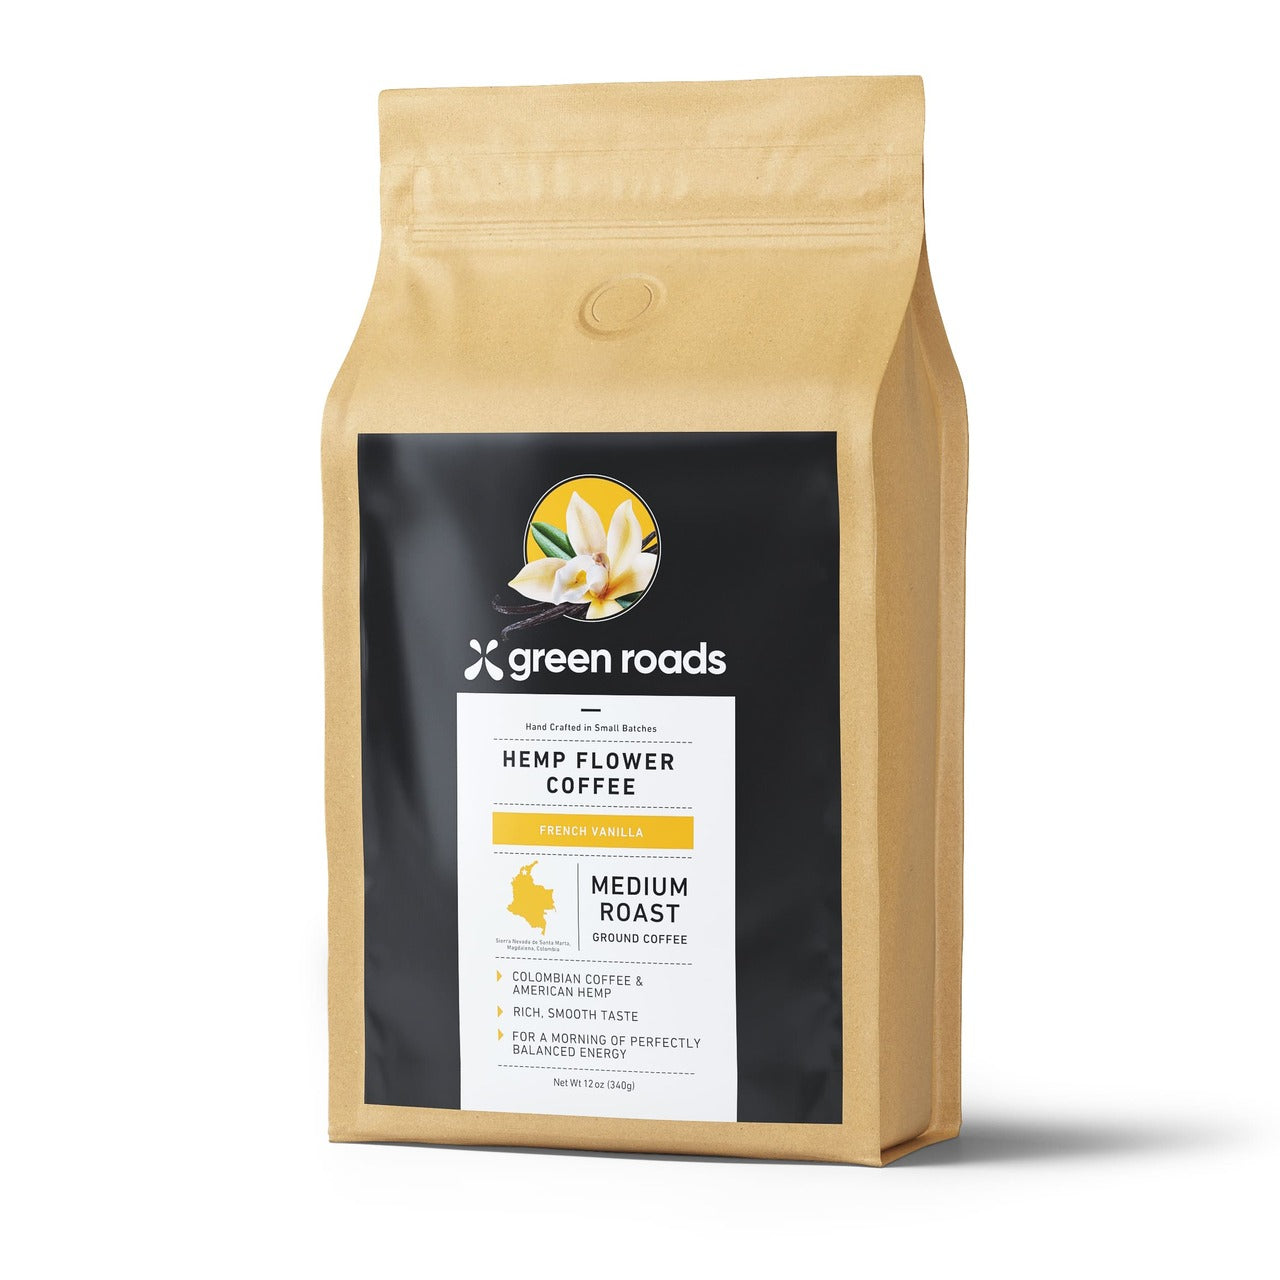 Hemp CBD Coffee - Medium Roast French Vanilla Hemp Flower Coffee 12 oz bag